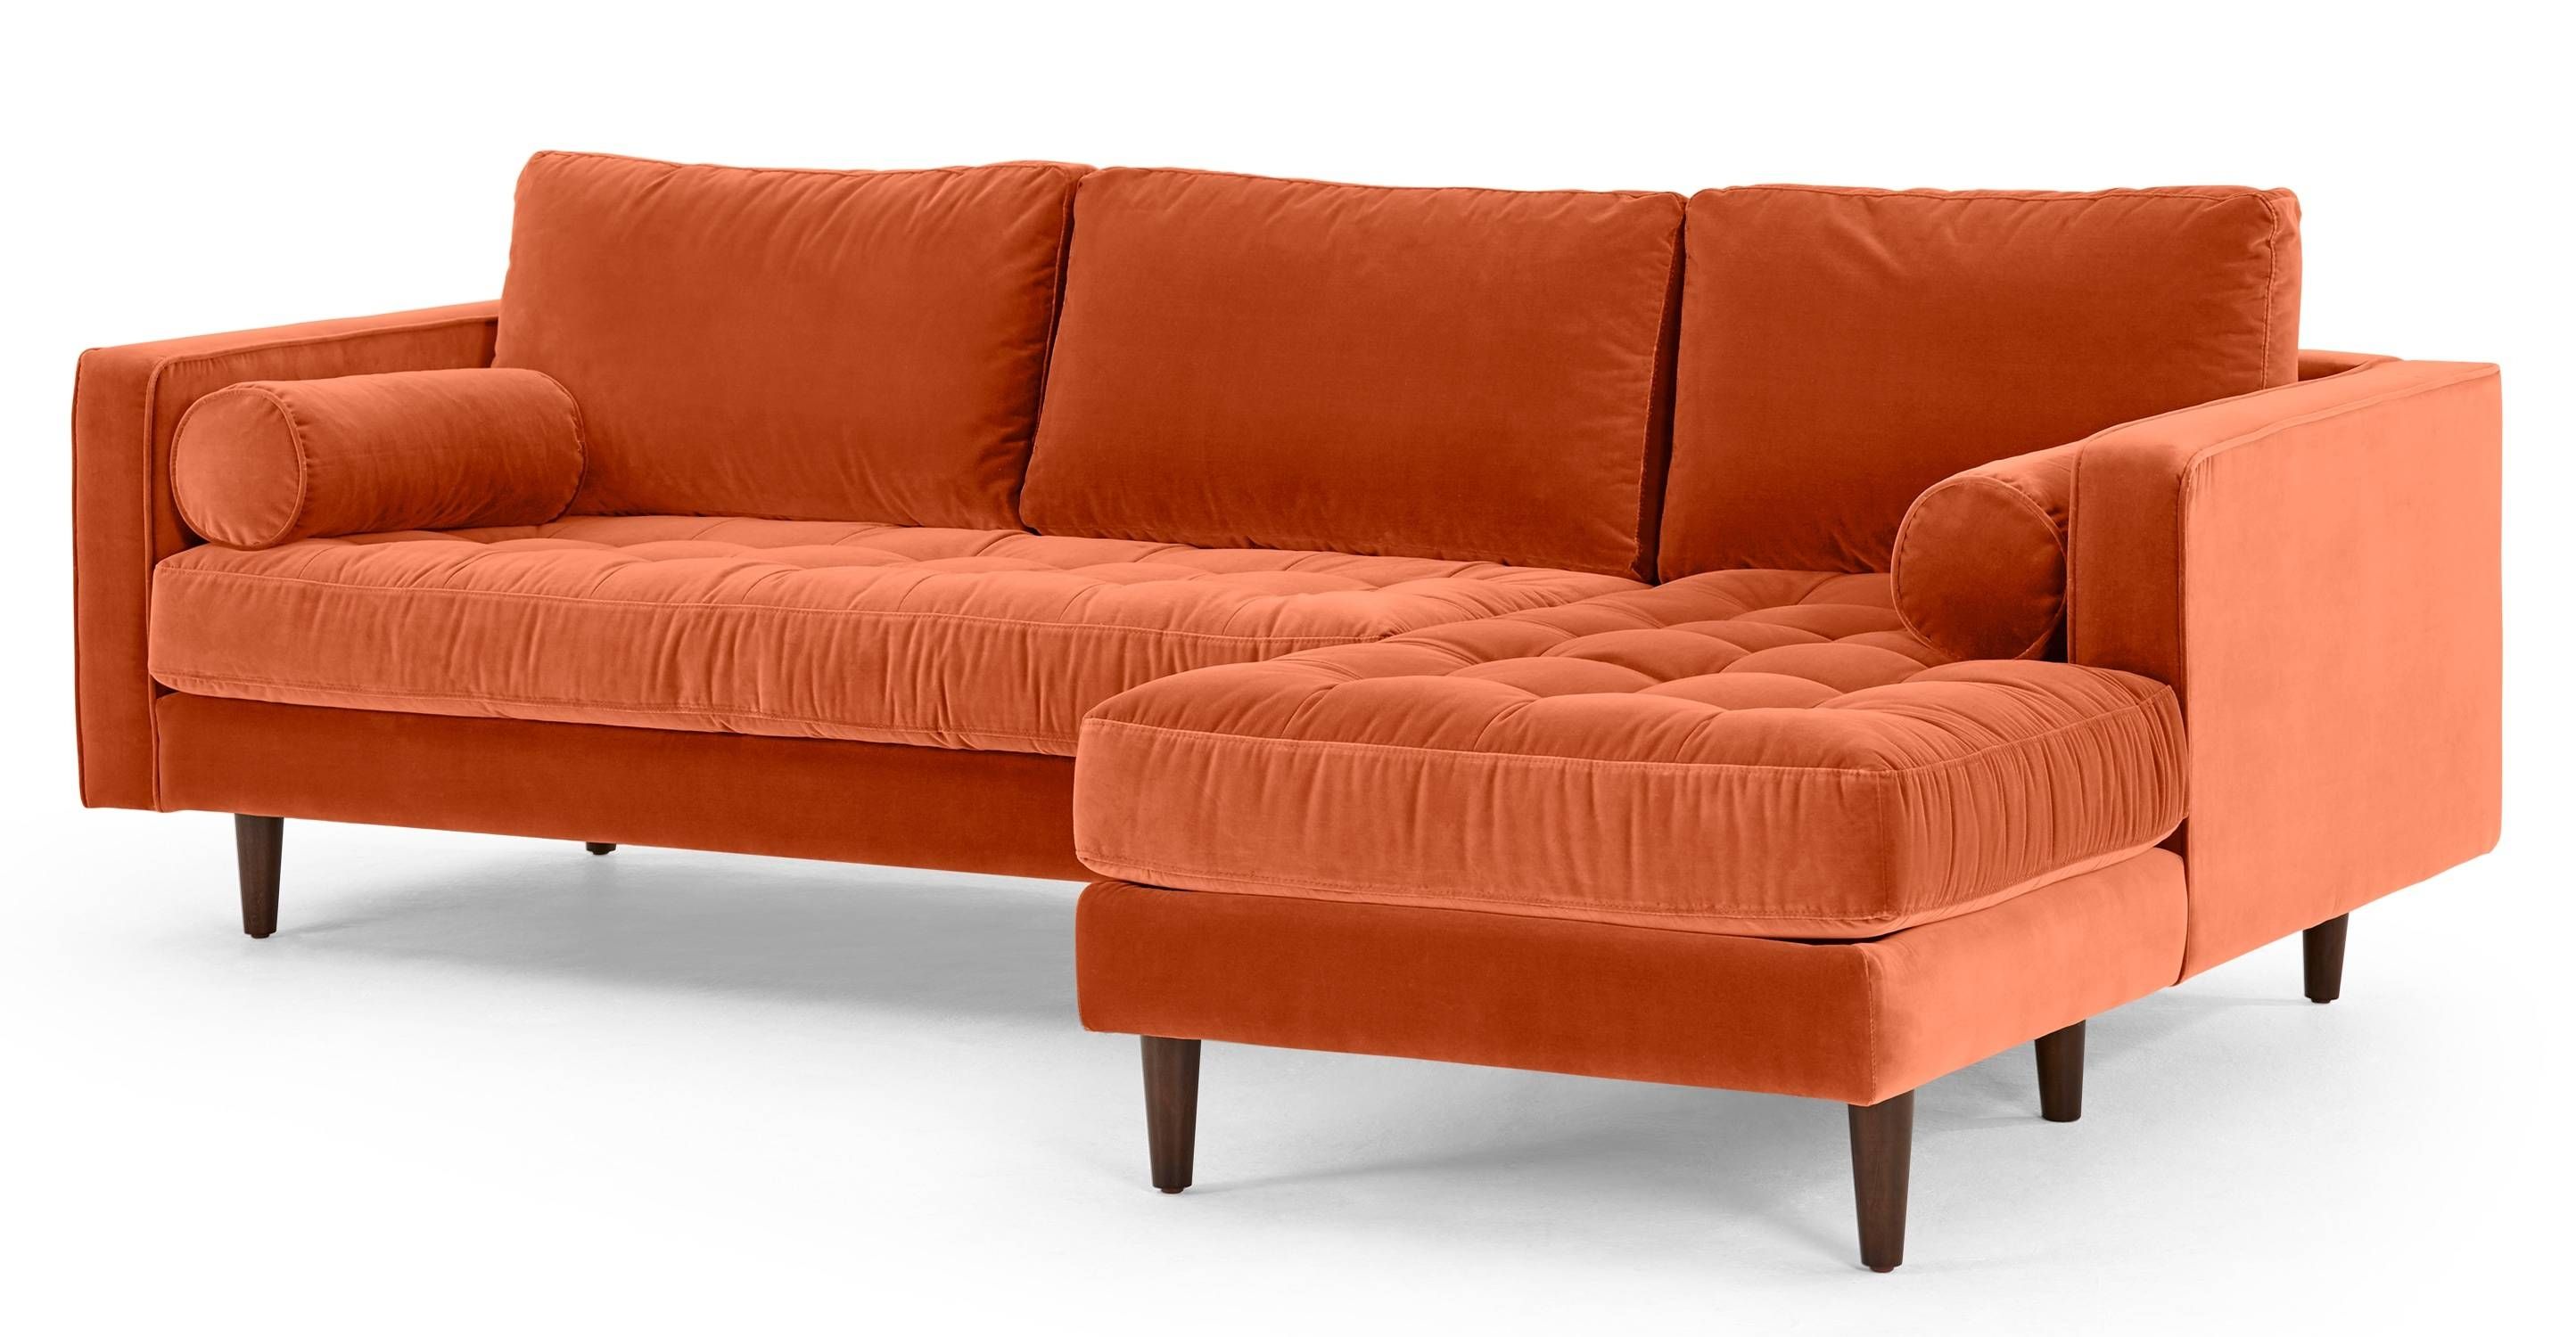 Scott 4 Seater Right Hand Facing Chaise End Sofa, Burnt Orange Pertaining To Burnt Orange Sofas (View 4 of 15)